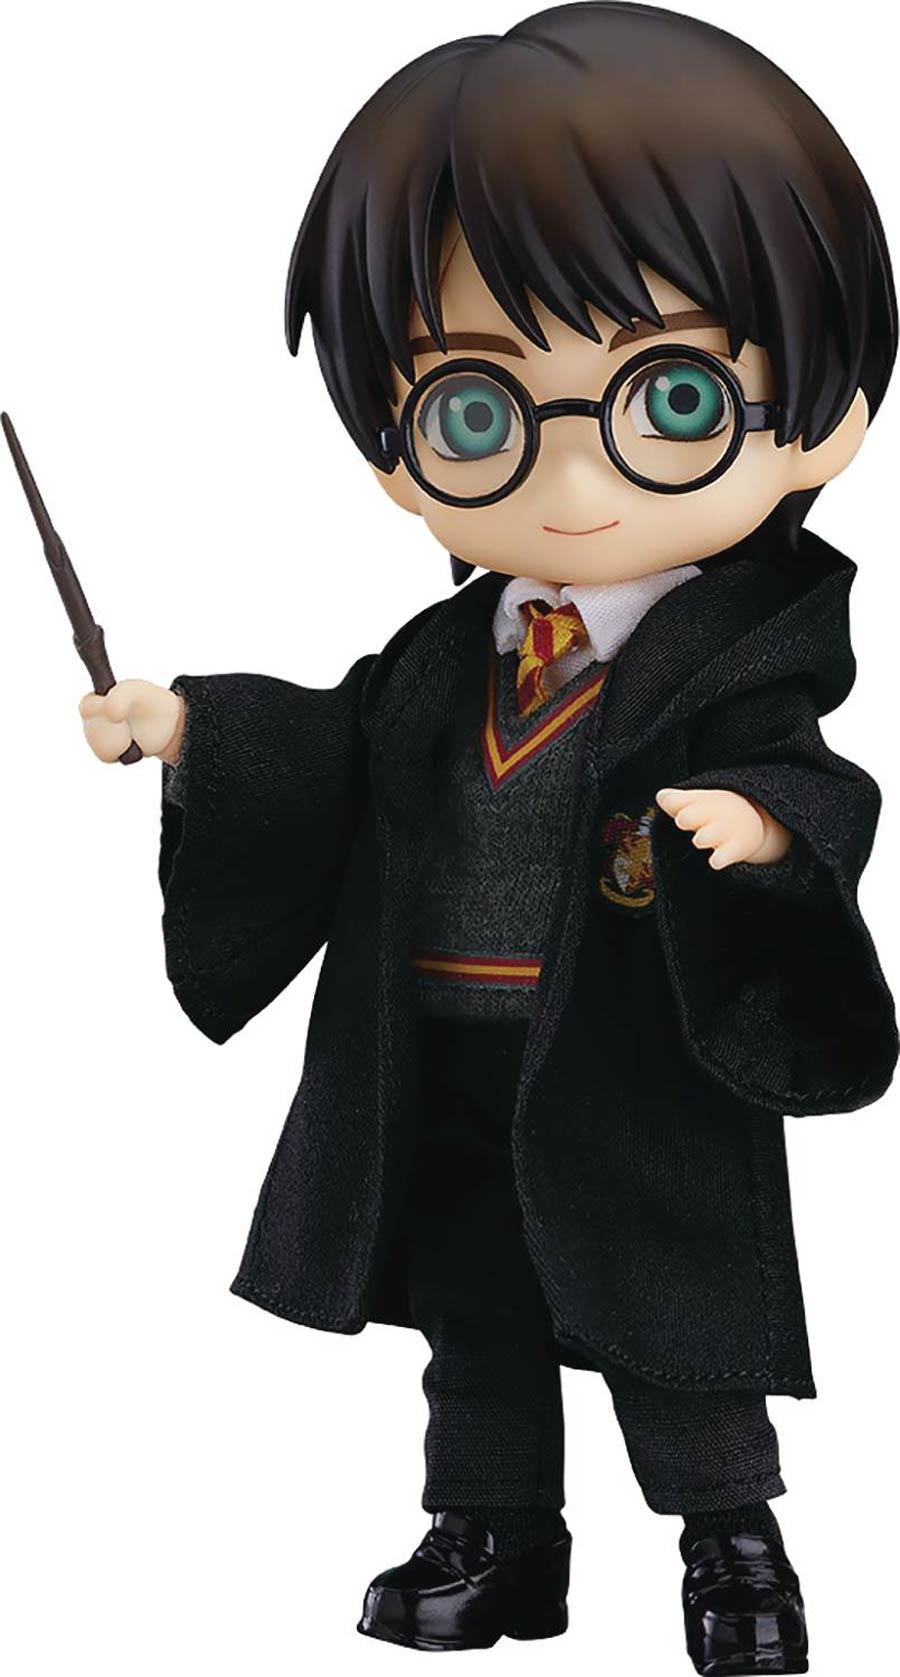 Harry Potter Nendoroid Doll - Harry Potter